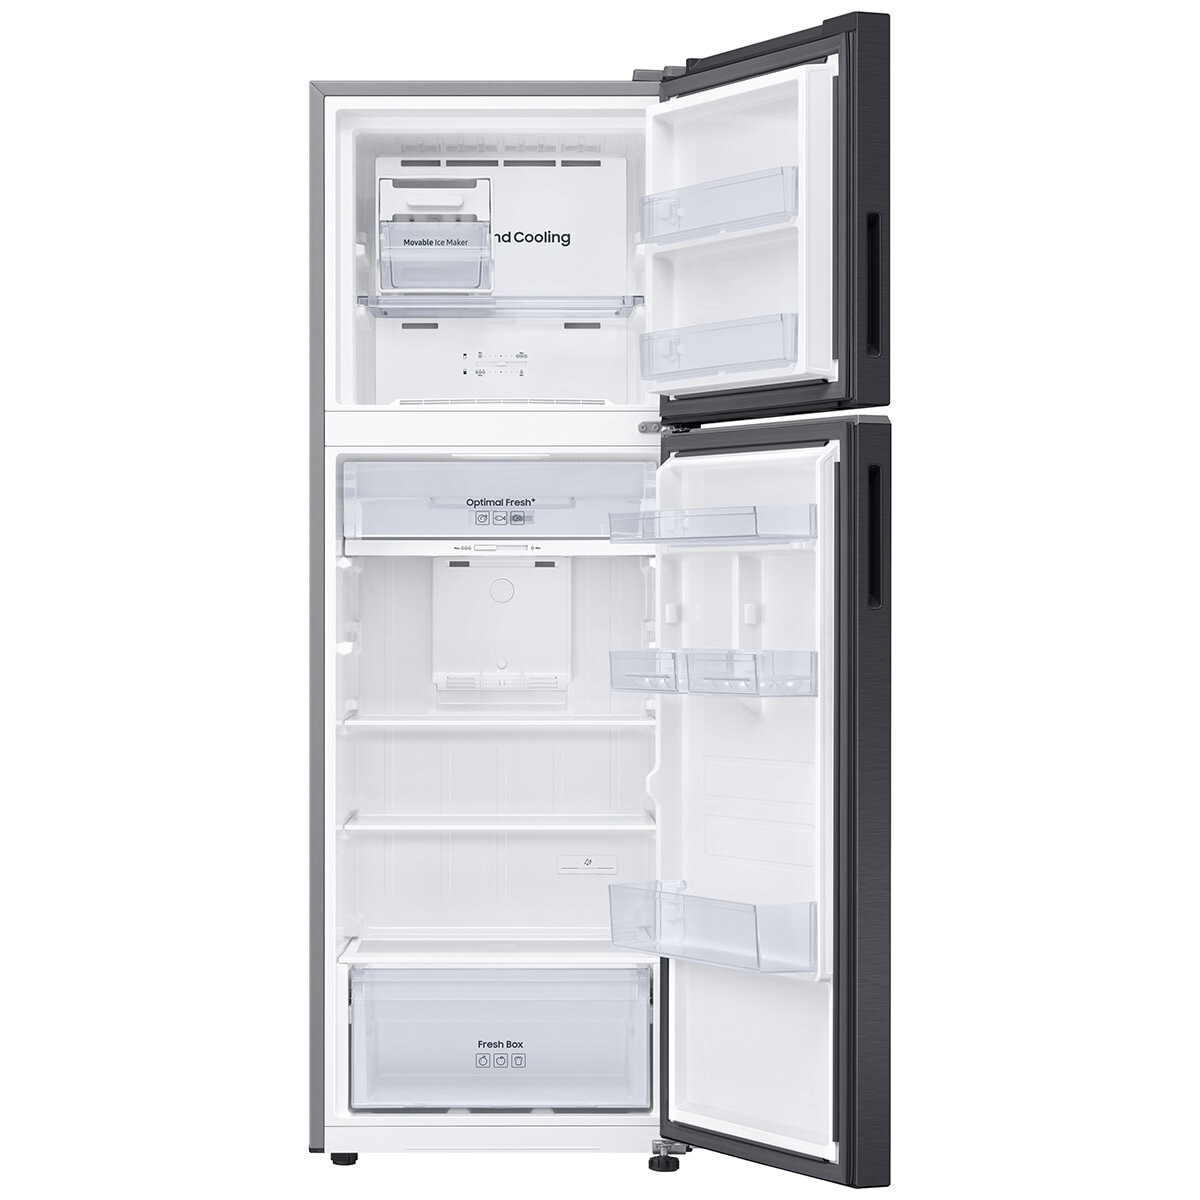 Samsung 305L Top Mount Refrigerator Black SRT3500B